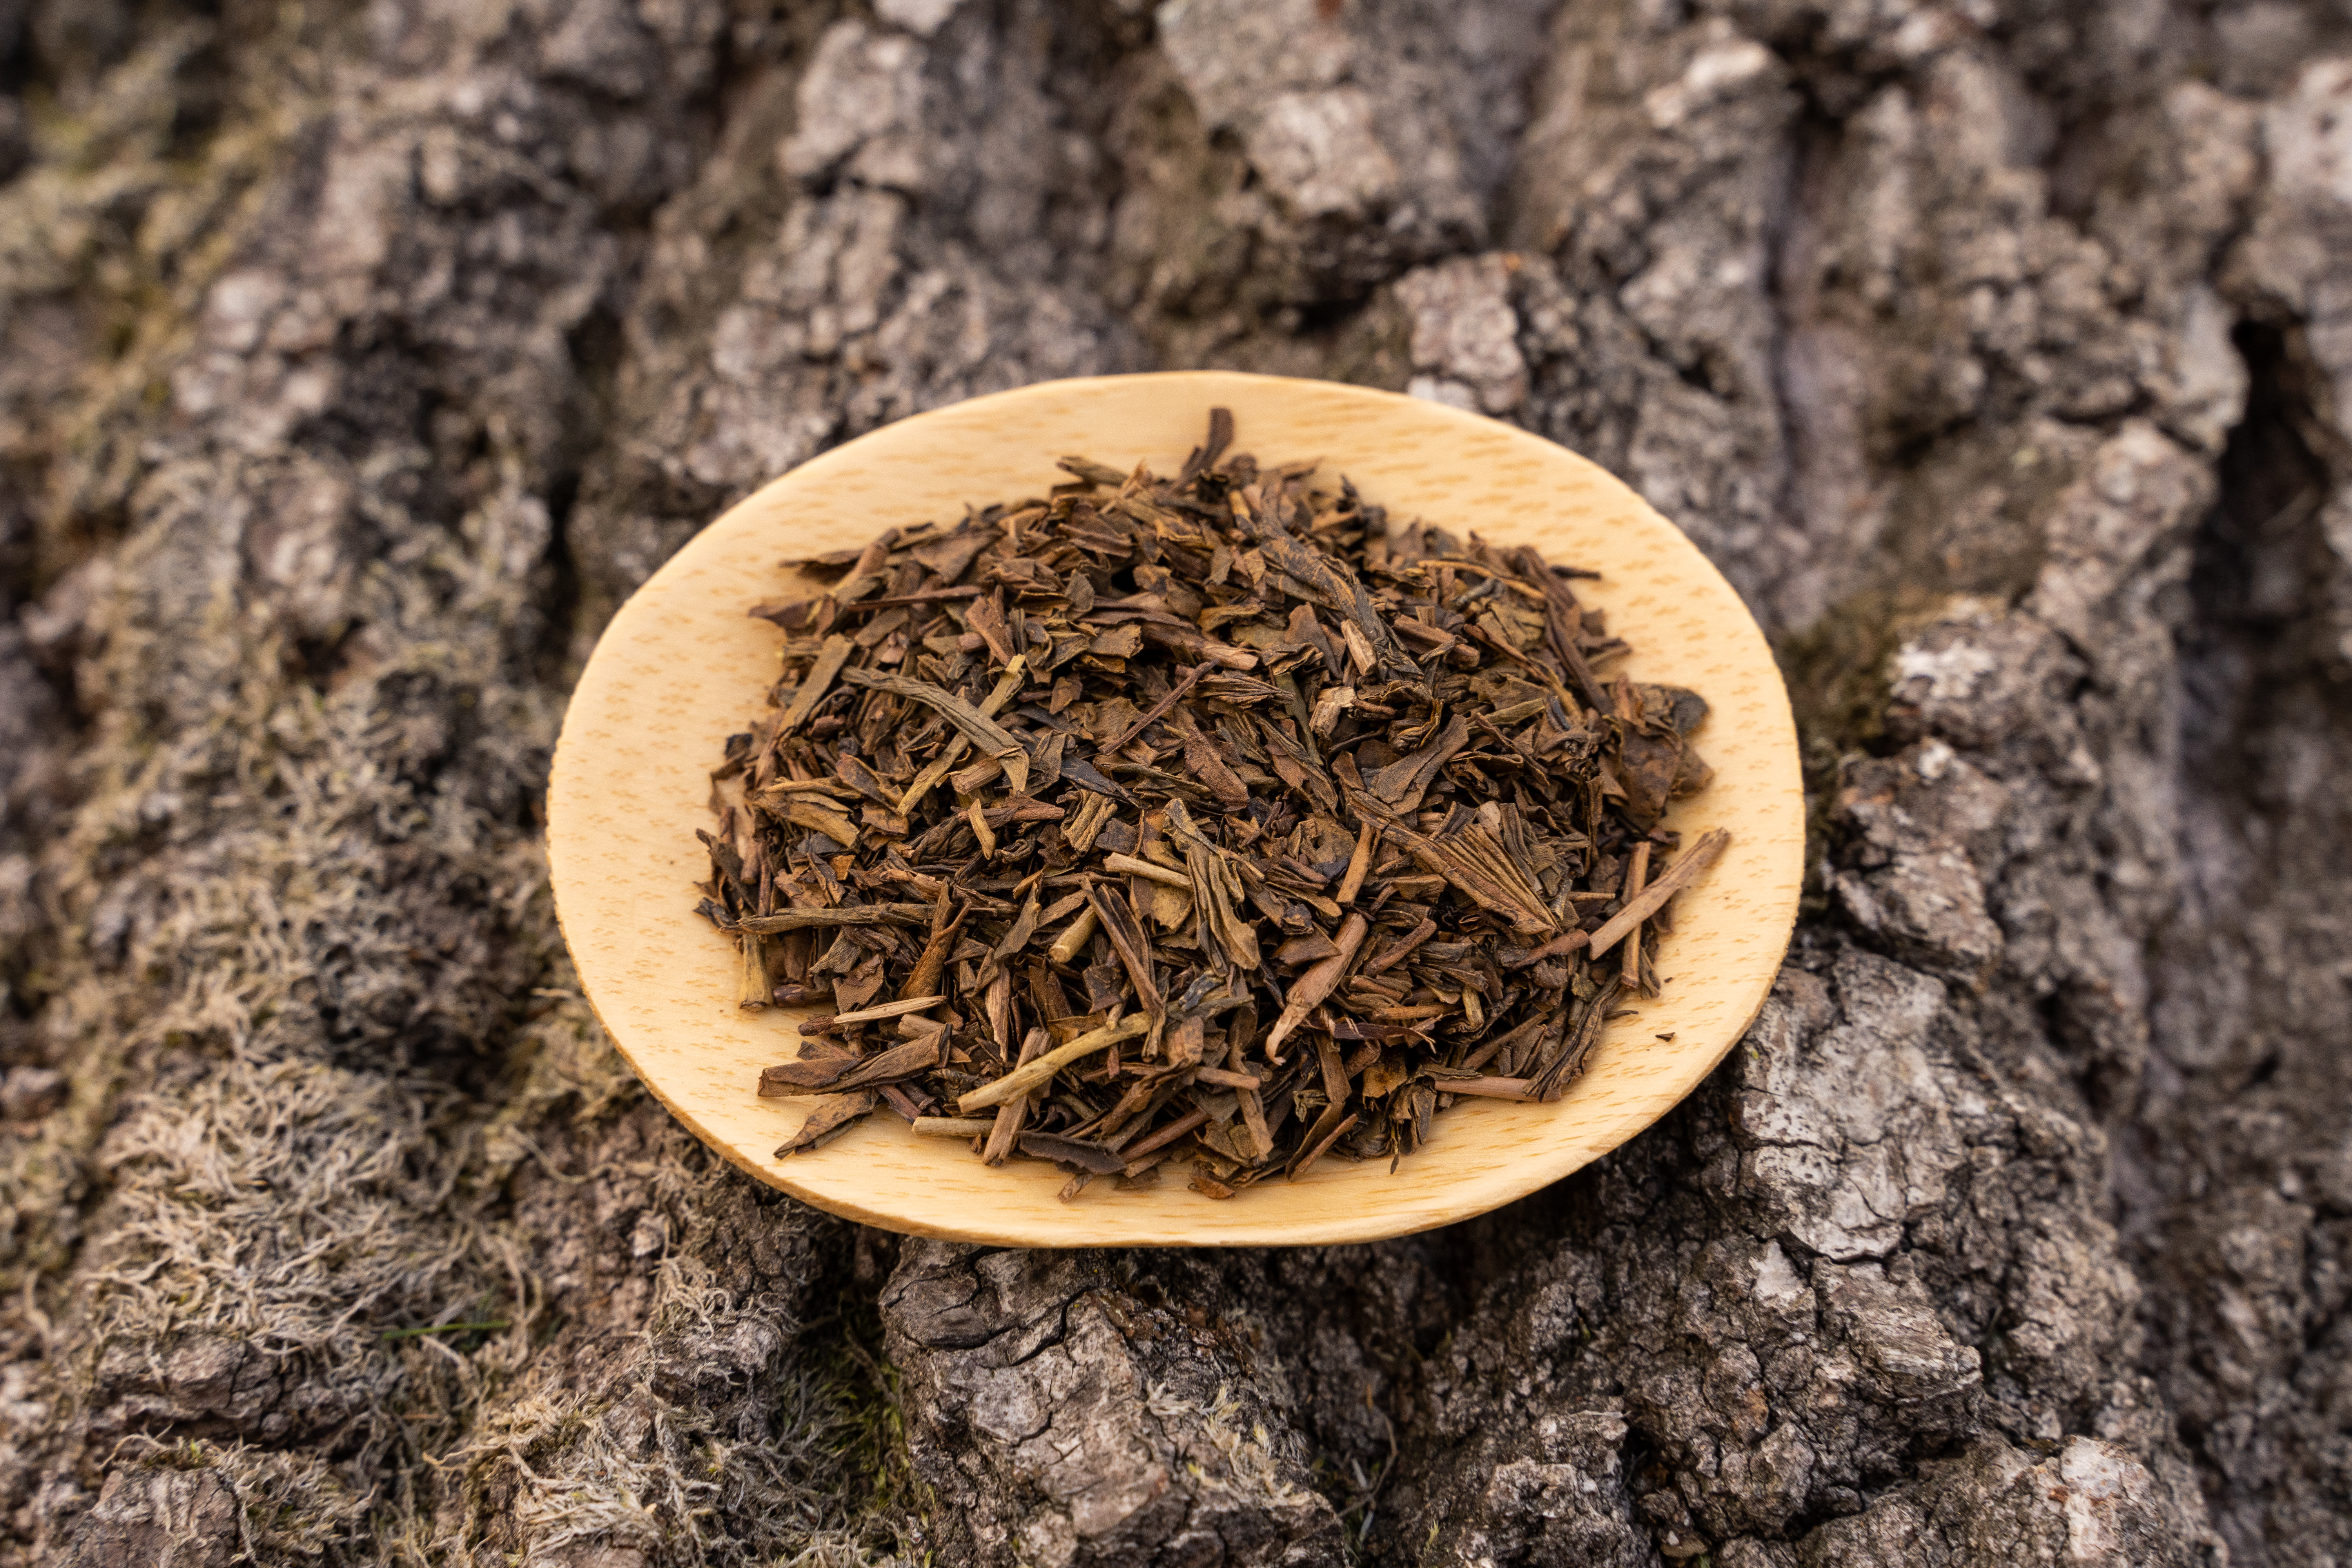 Hojicha - Organic Japanese Green Tea